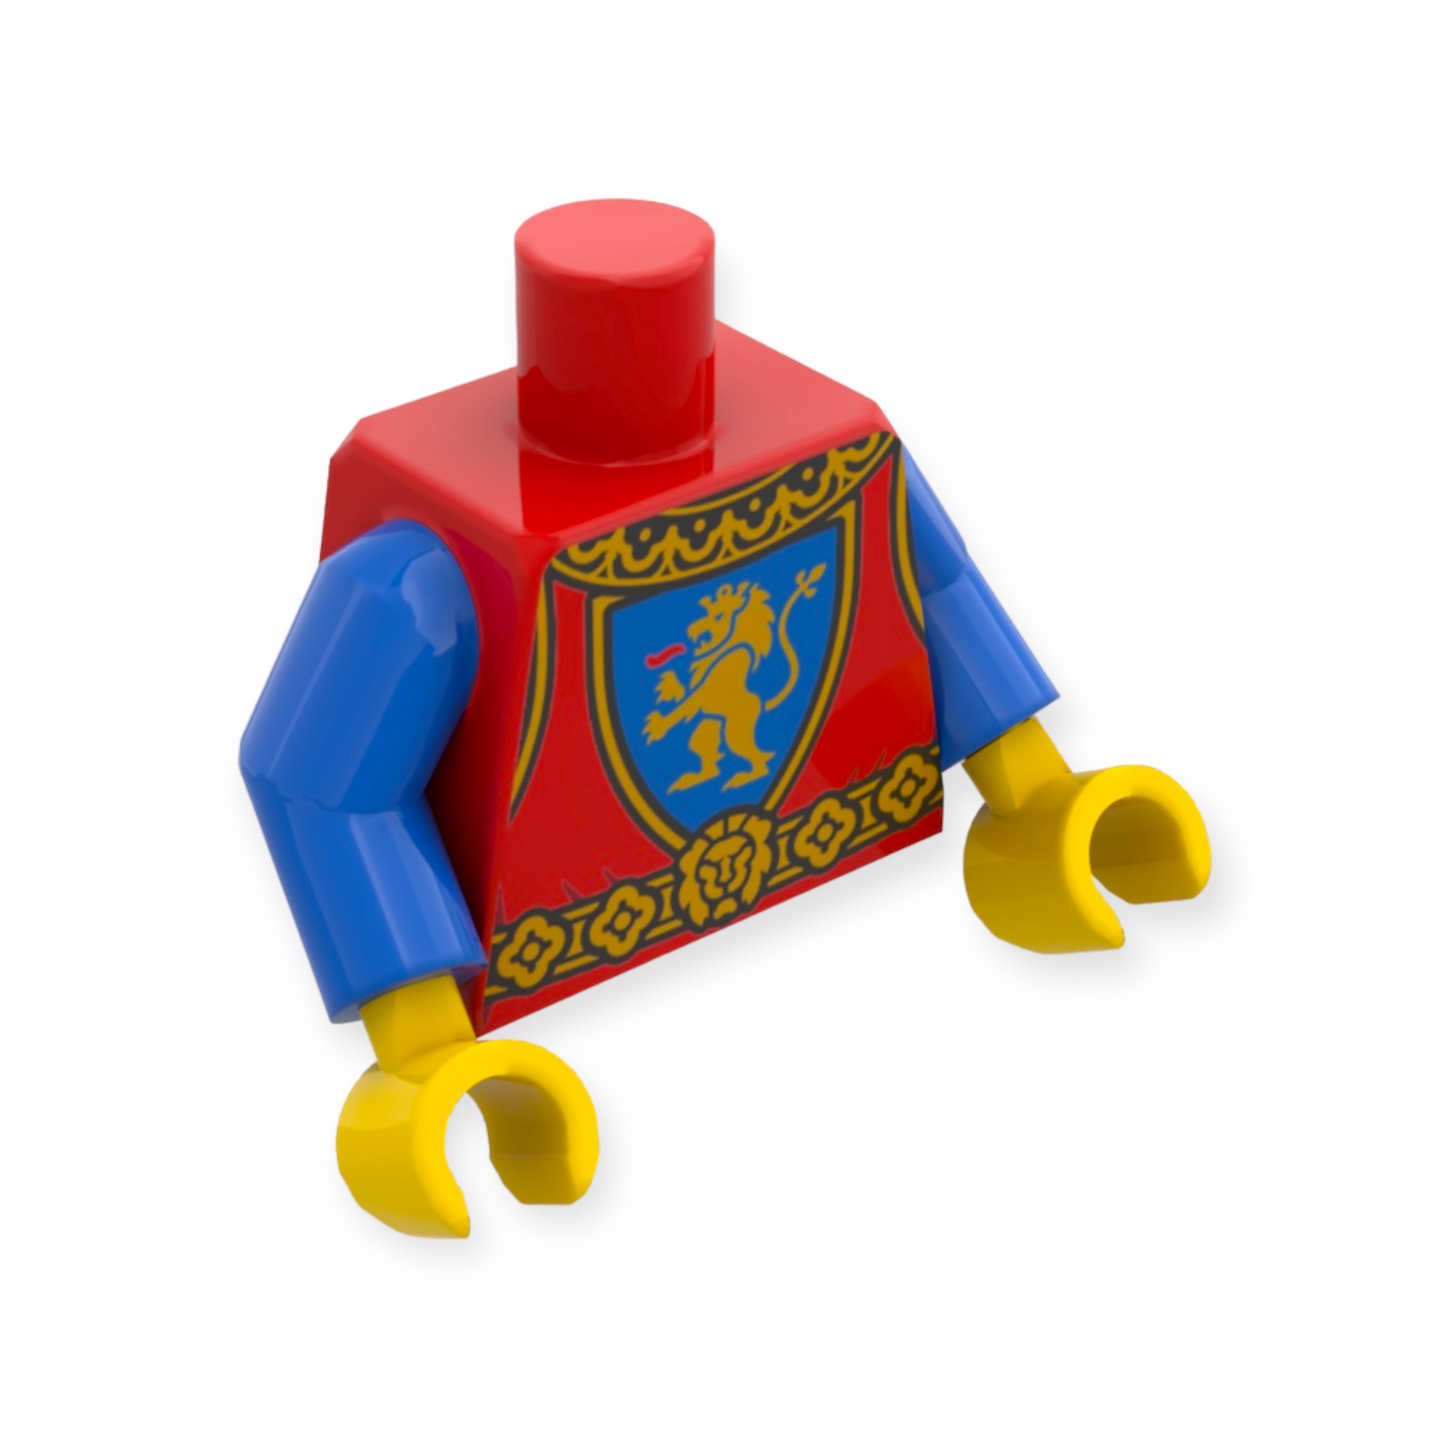 LEGO Torso - 6227 Castle Surcoat Gold Collar and Belt